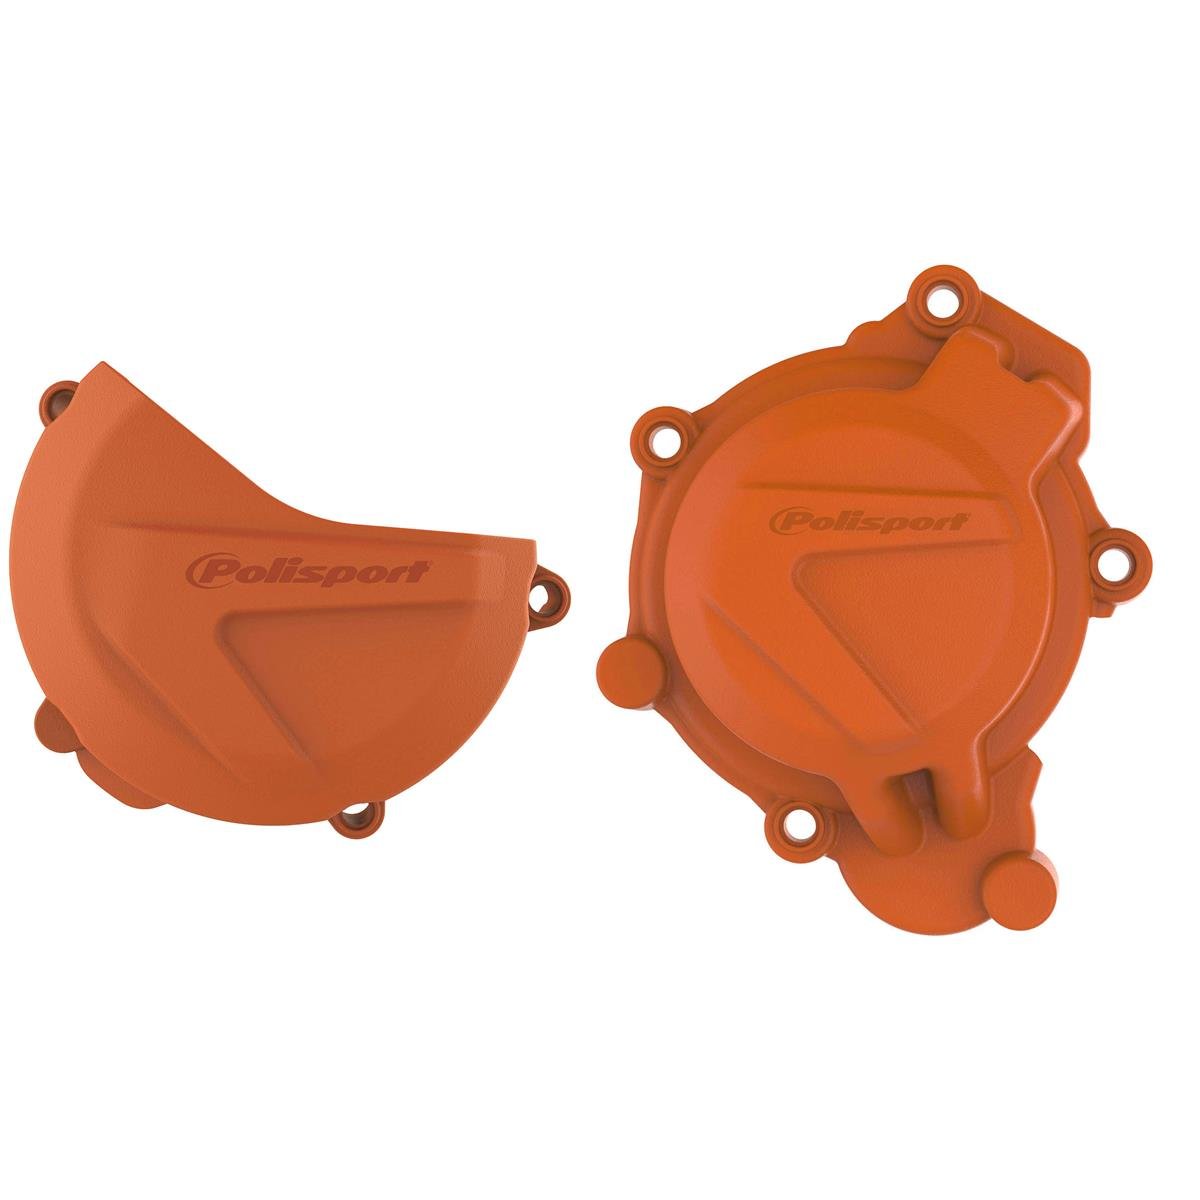 Polisport Clutch/Ignition Cover Protection  KTM SX 125/150 16-18, Orange